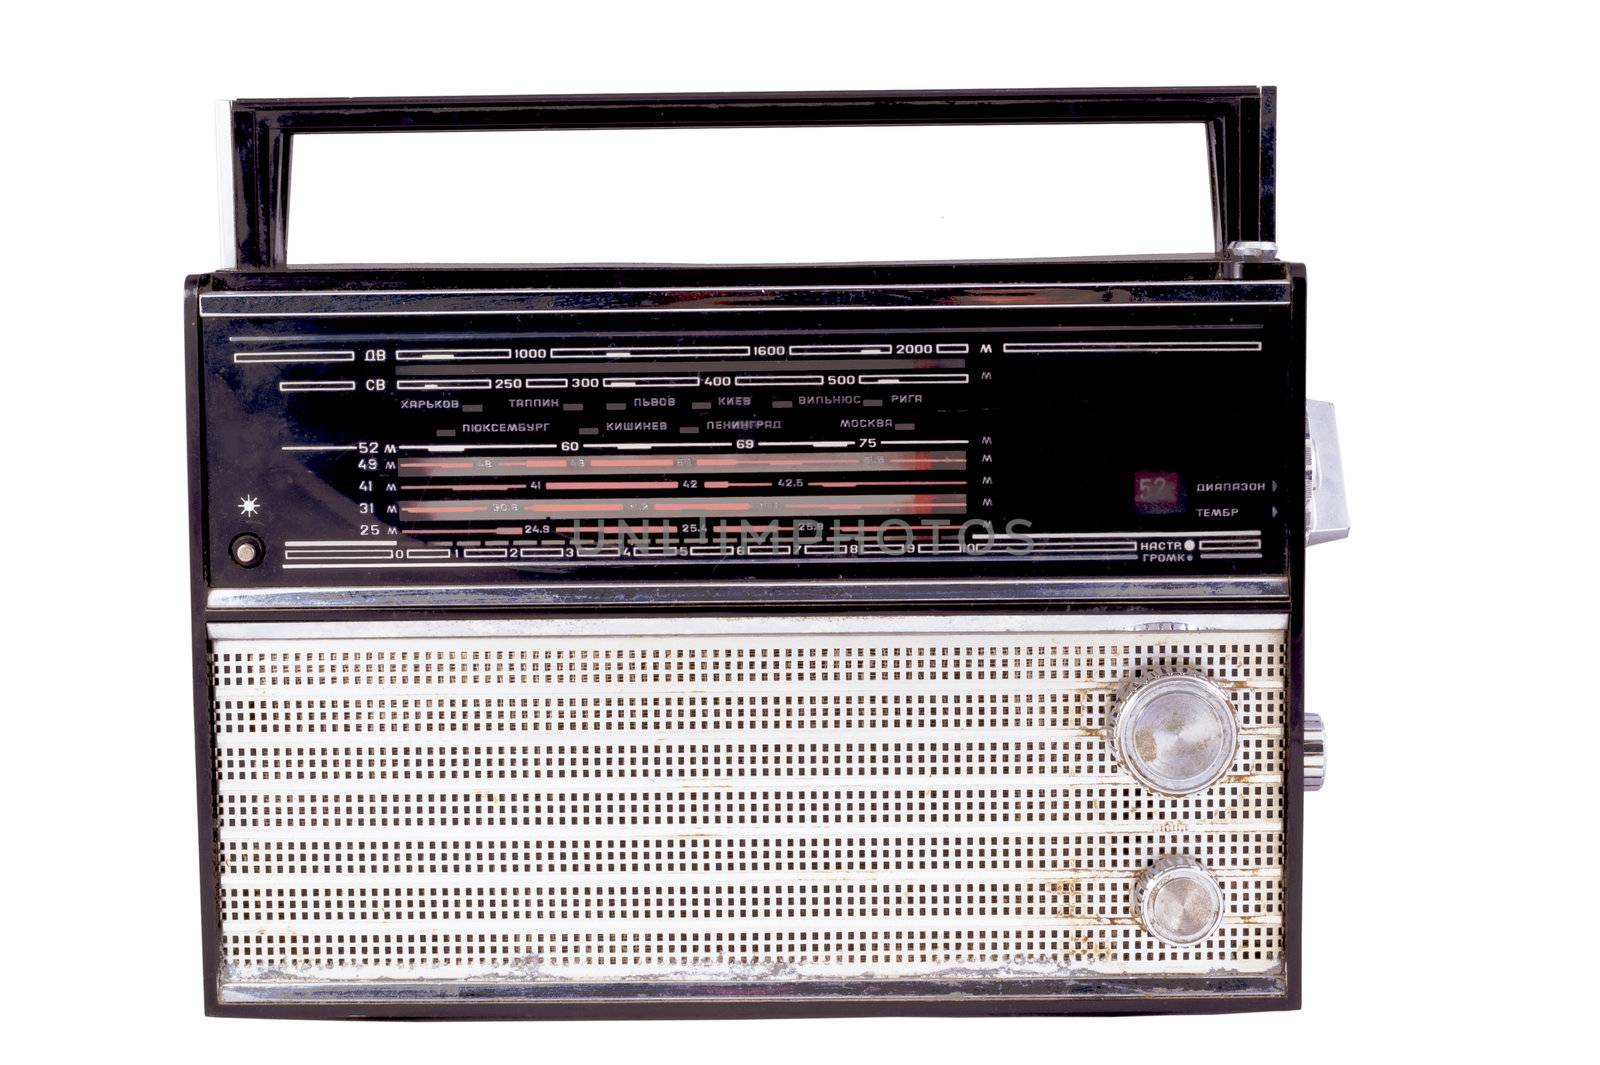 Old radio by Alenmax